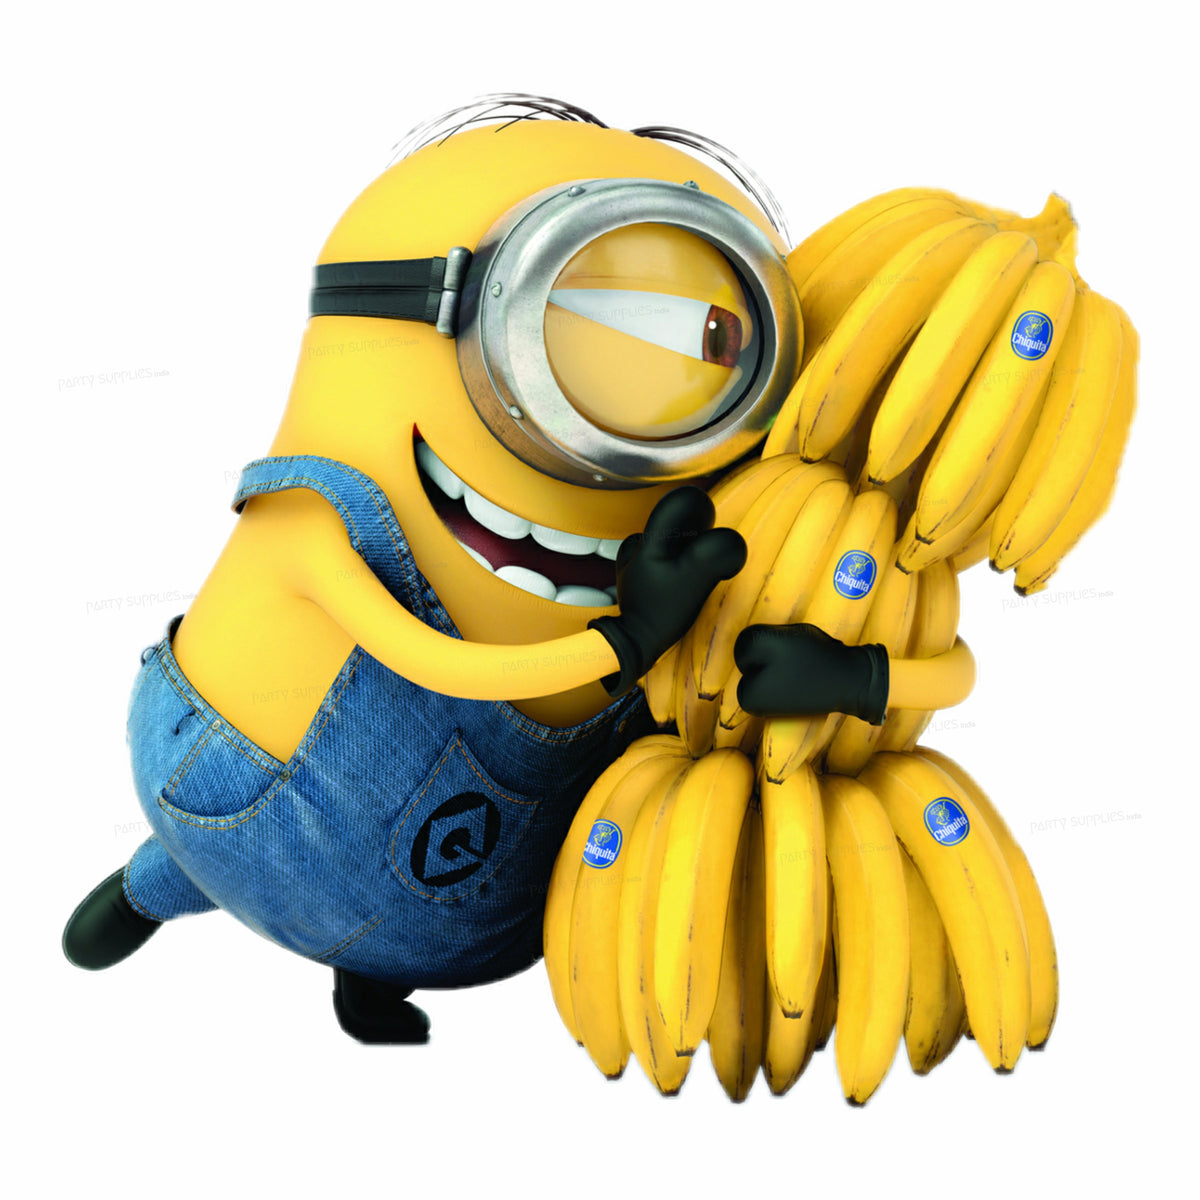 Minion Theme with Banana Cutout